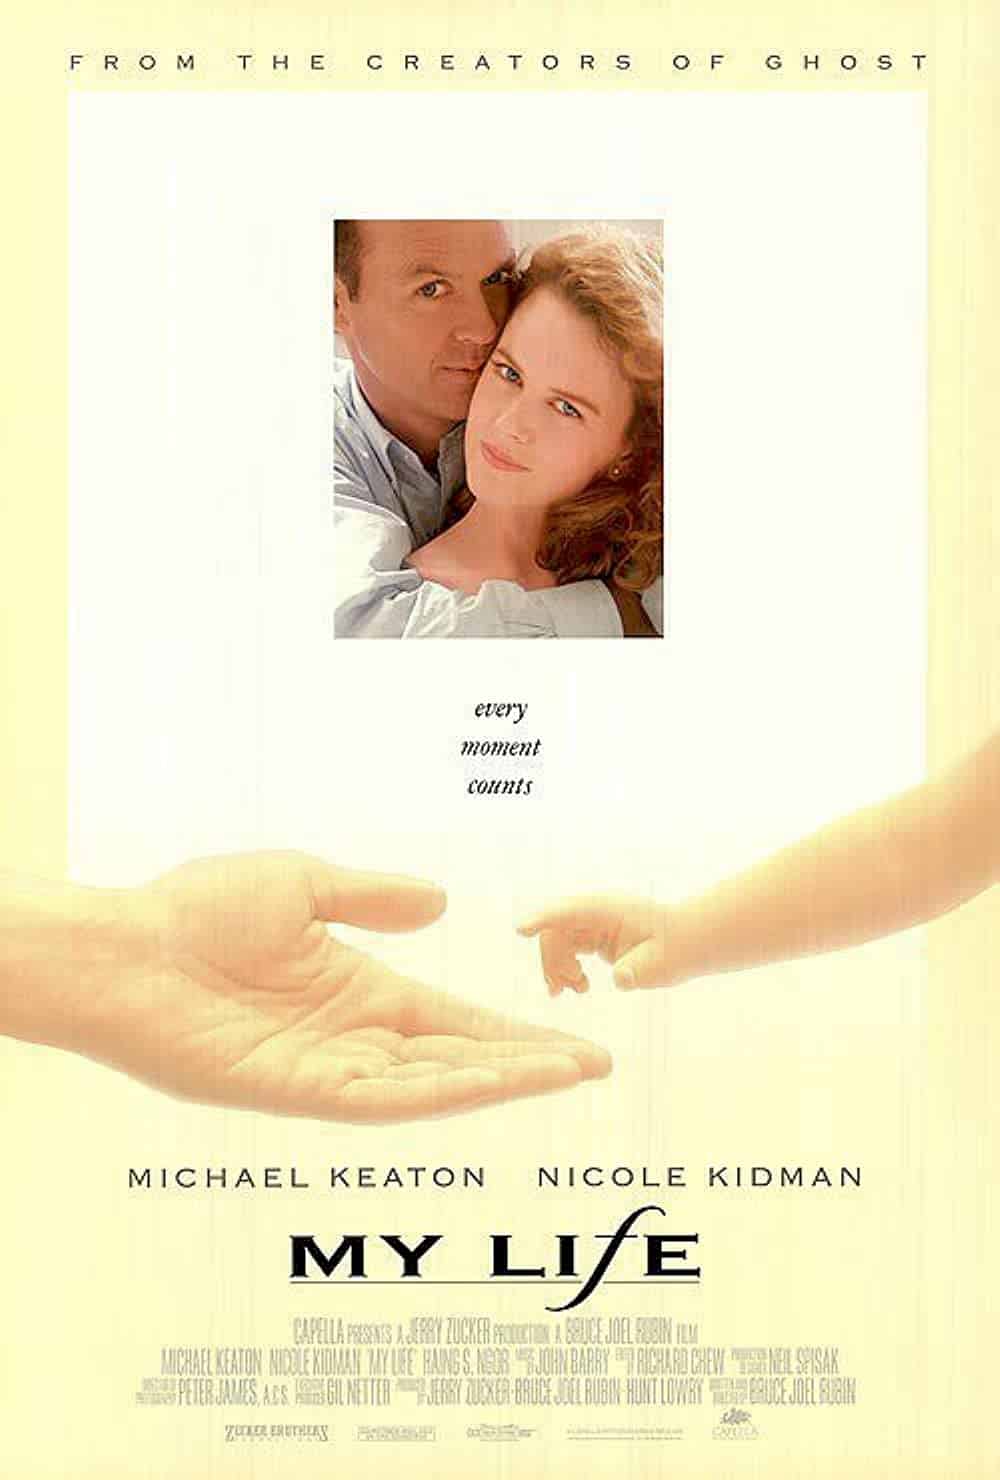 My Life (1993) Best Nicole Kidman Movies (Ranked)